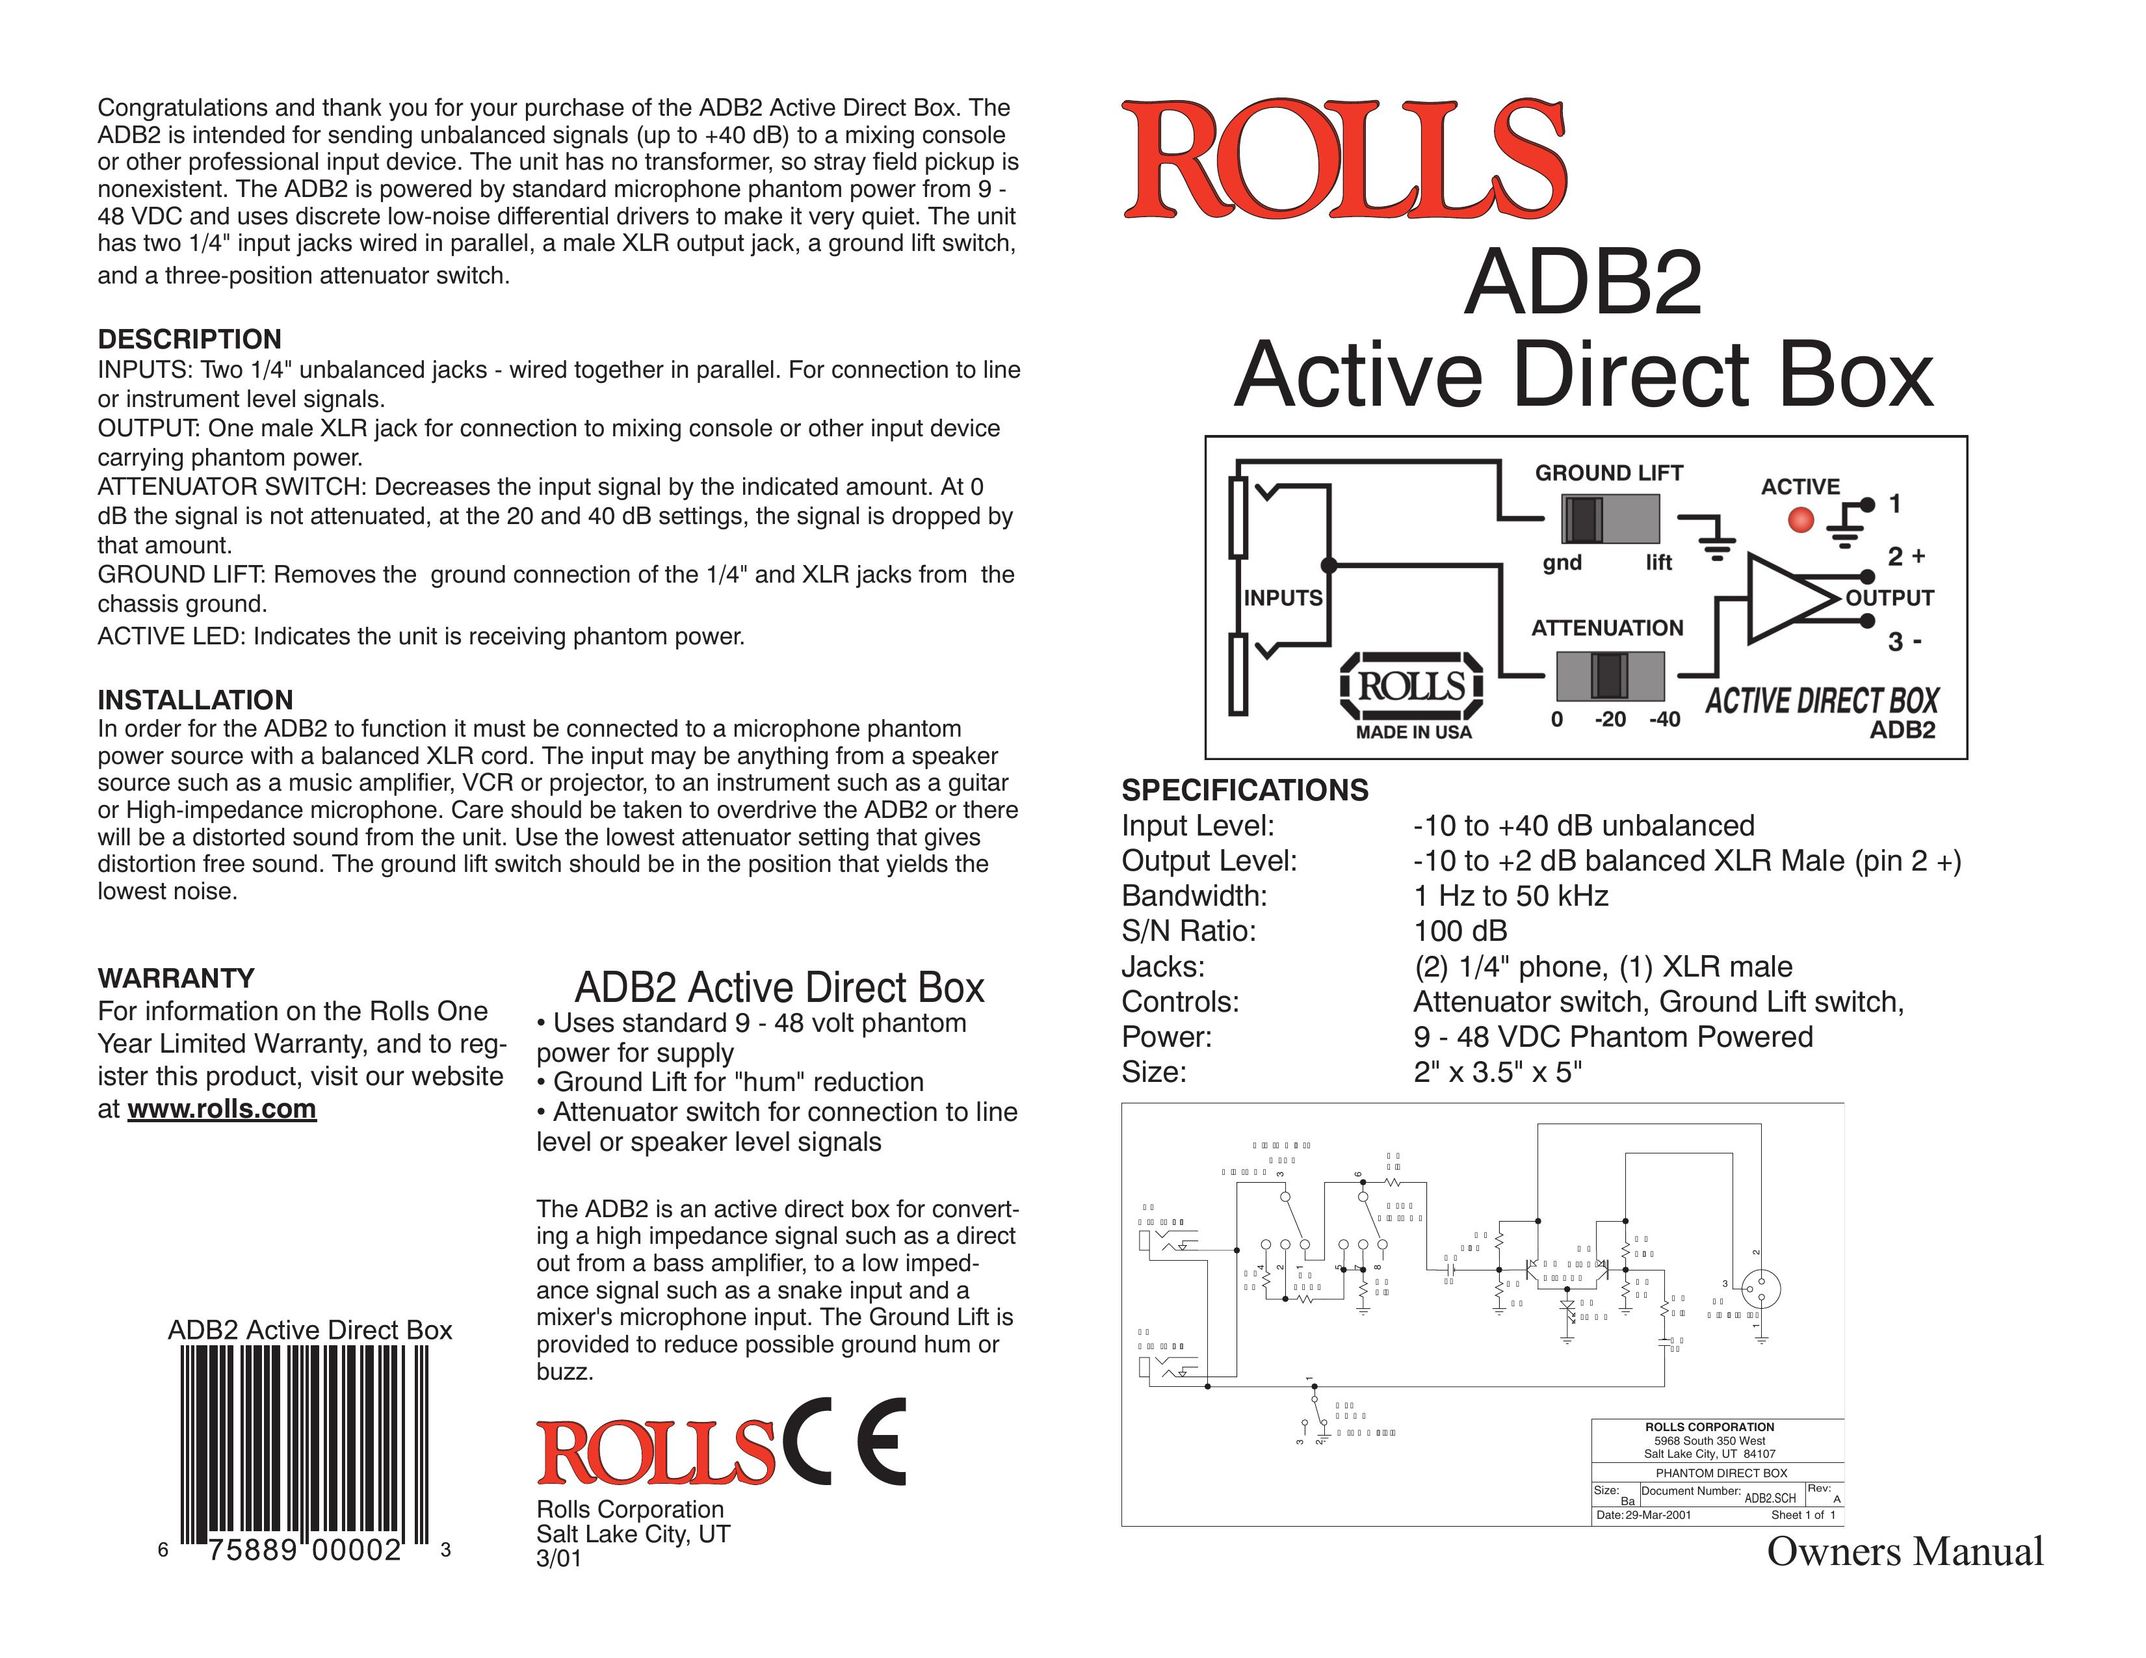 Rolls ADB2 Satellite TV System User Manual